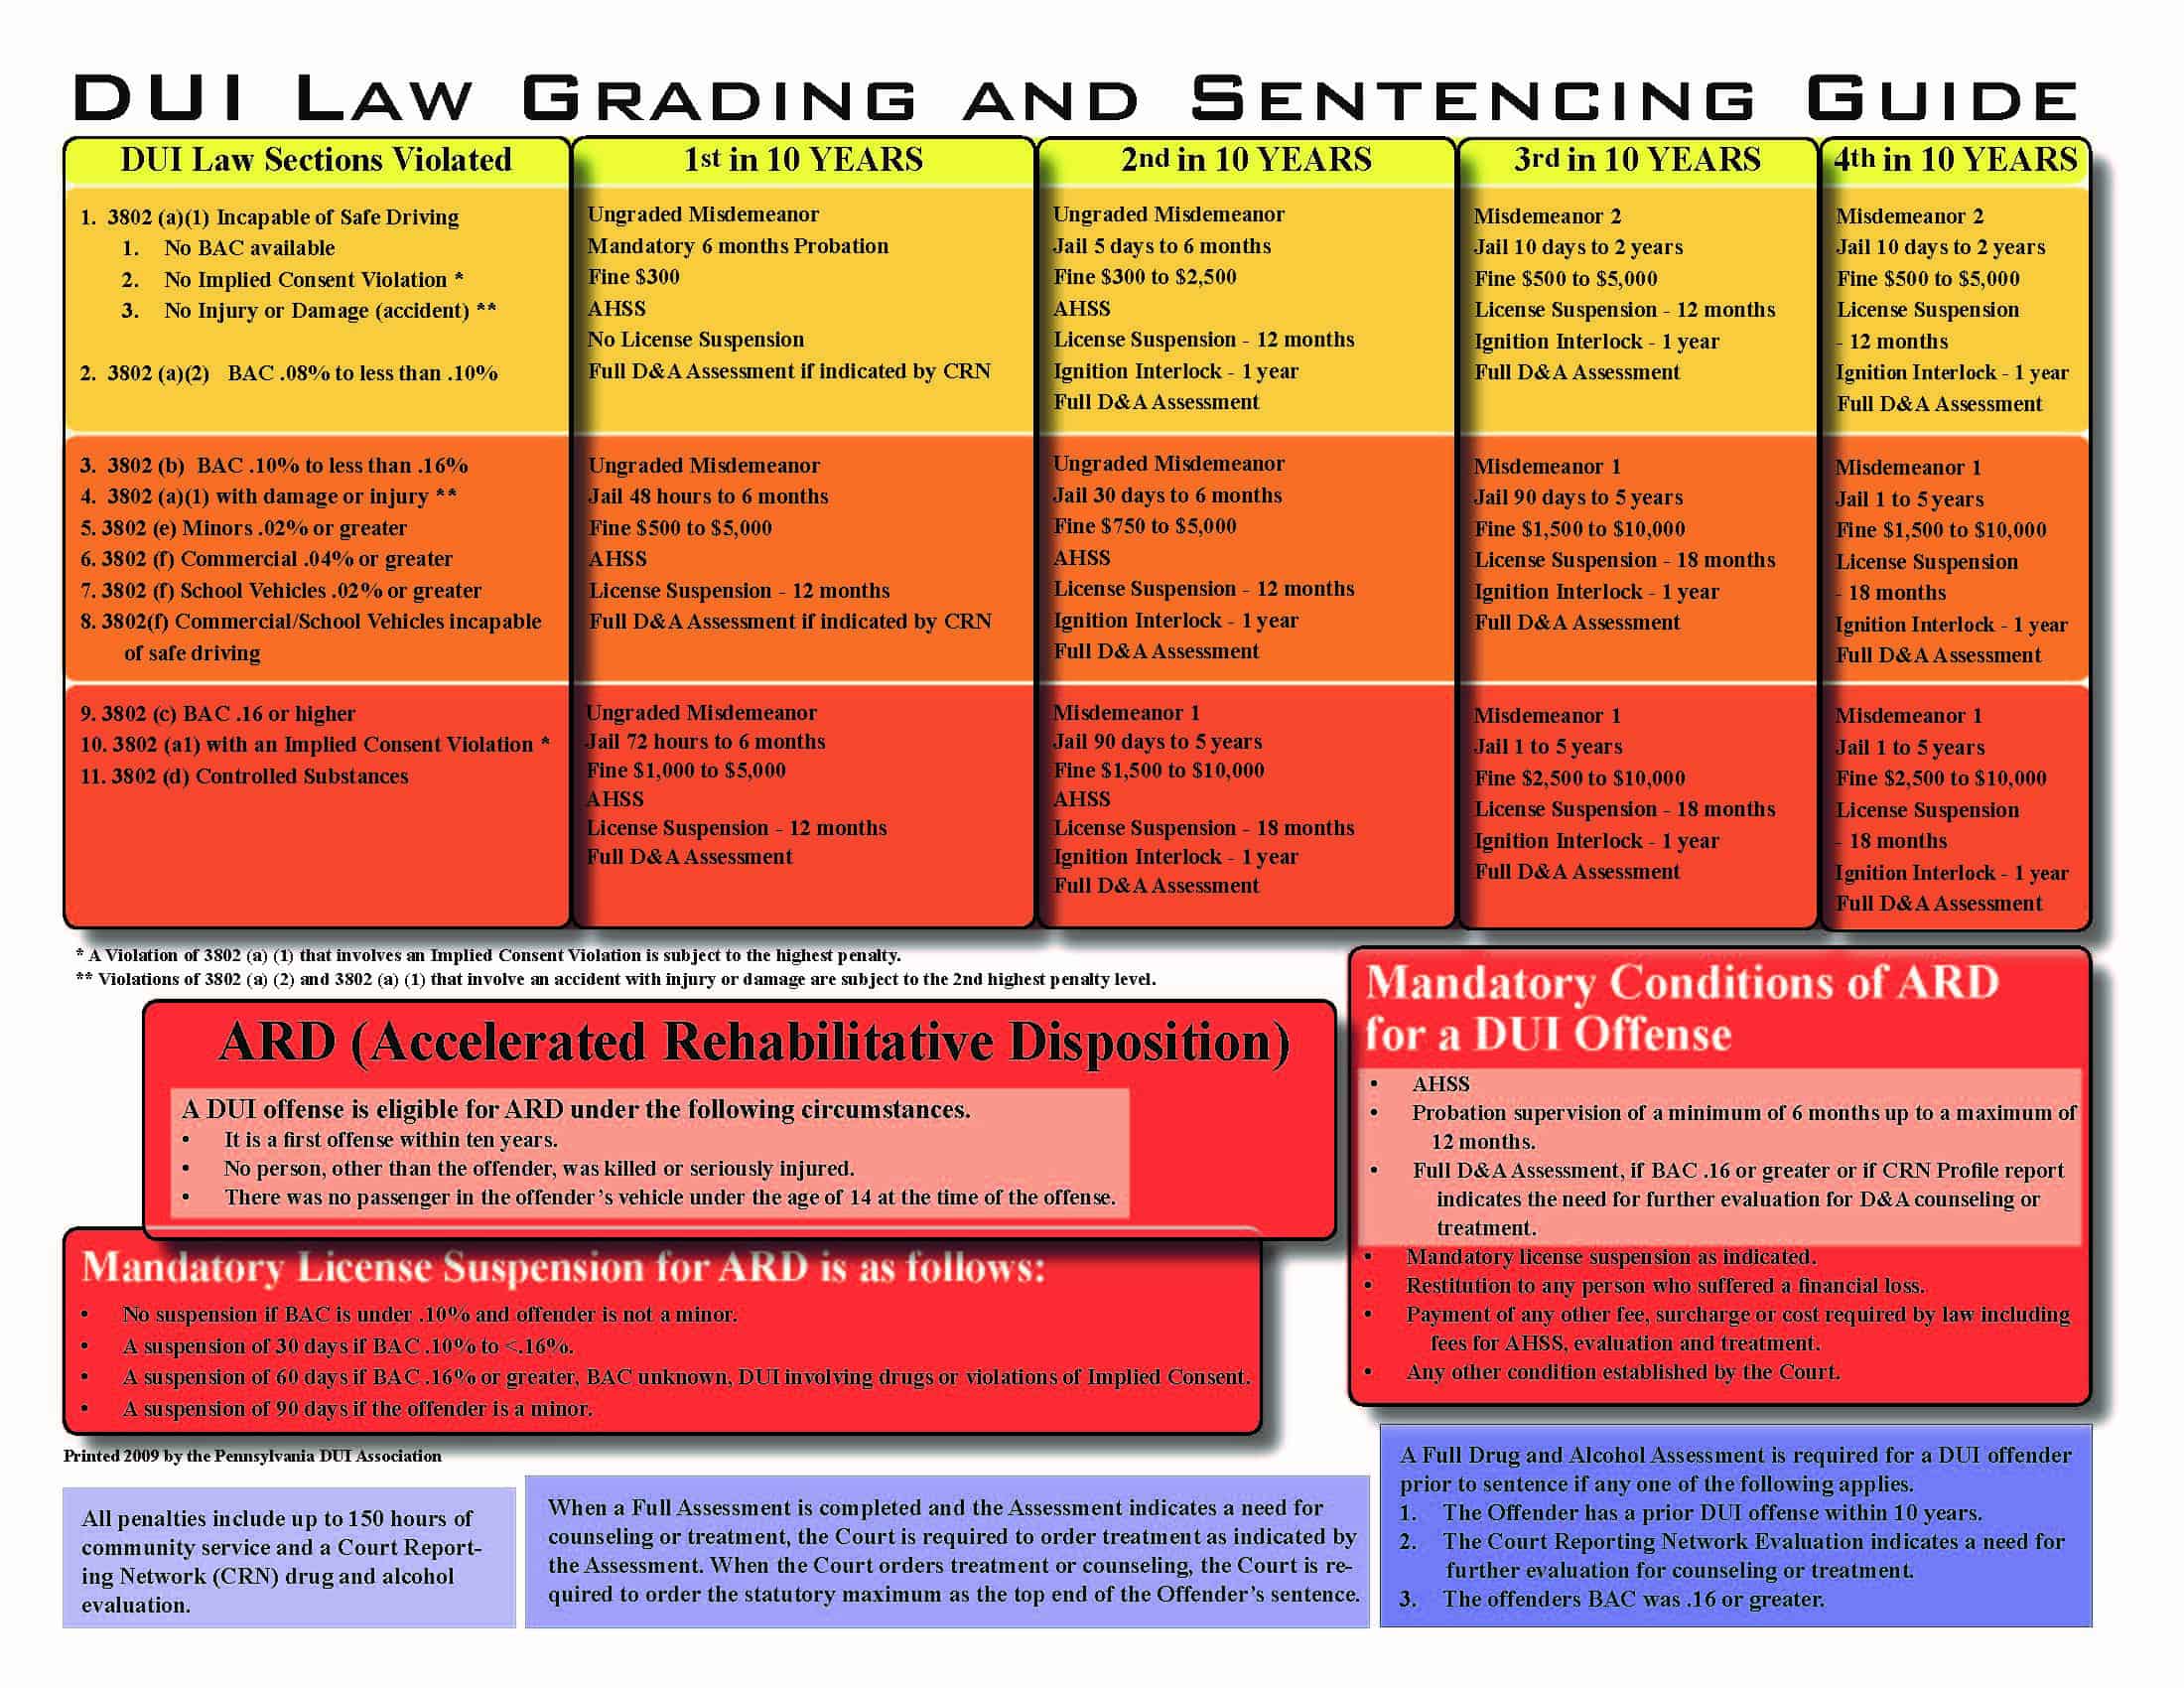 DUI Law Grading & Sentencing Guide